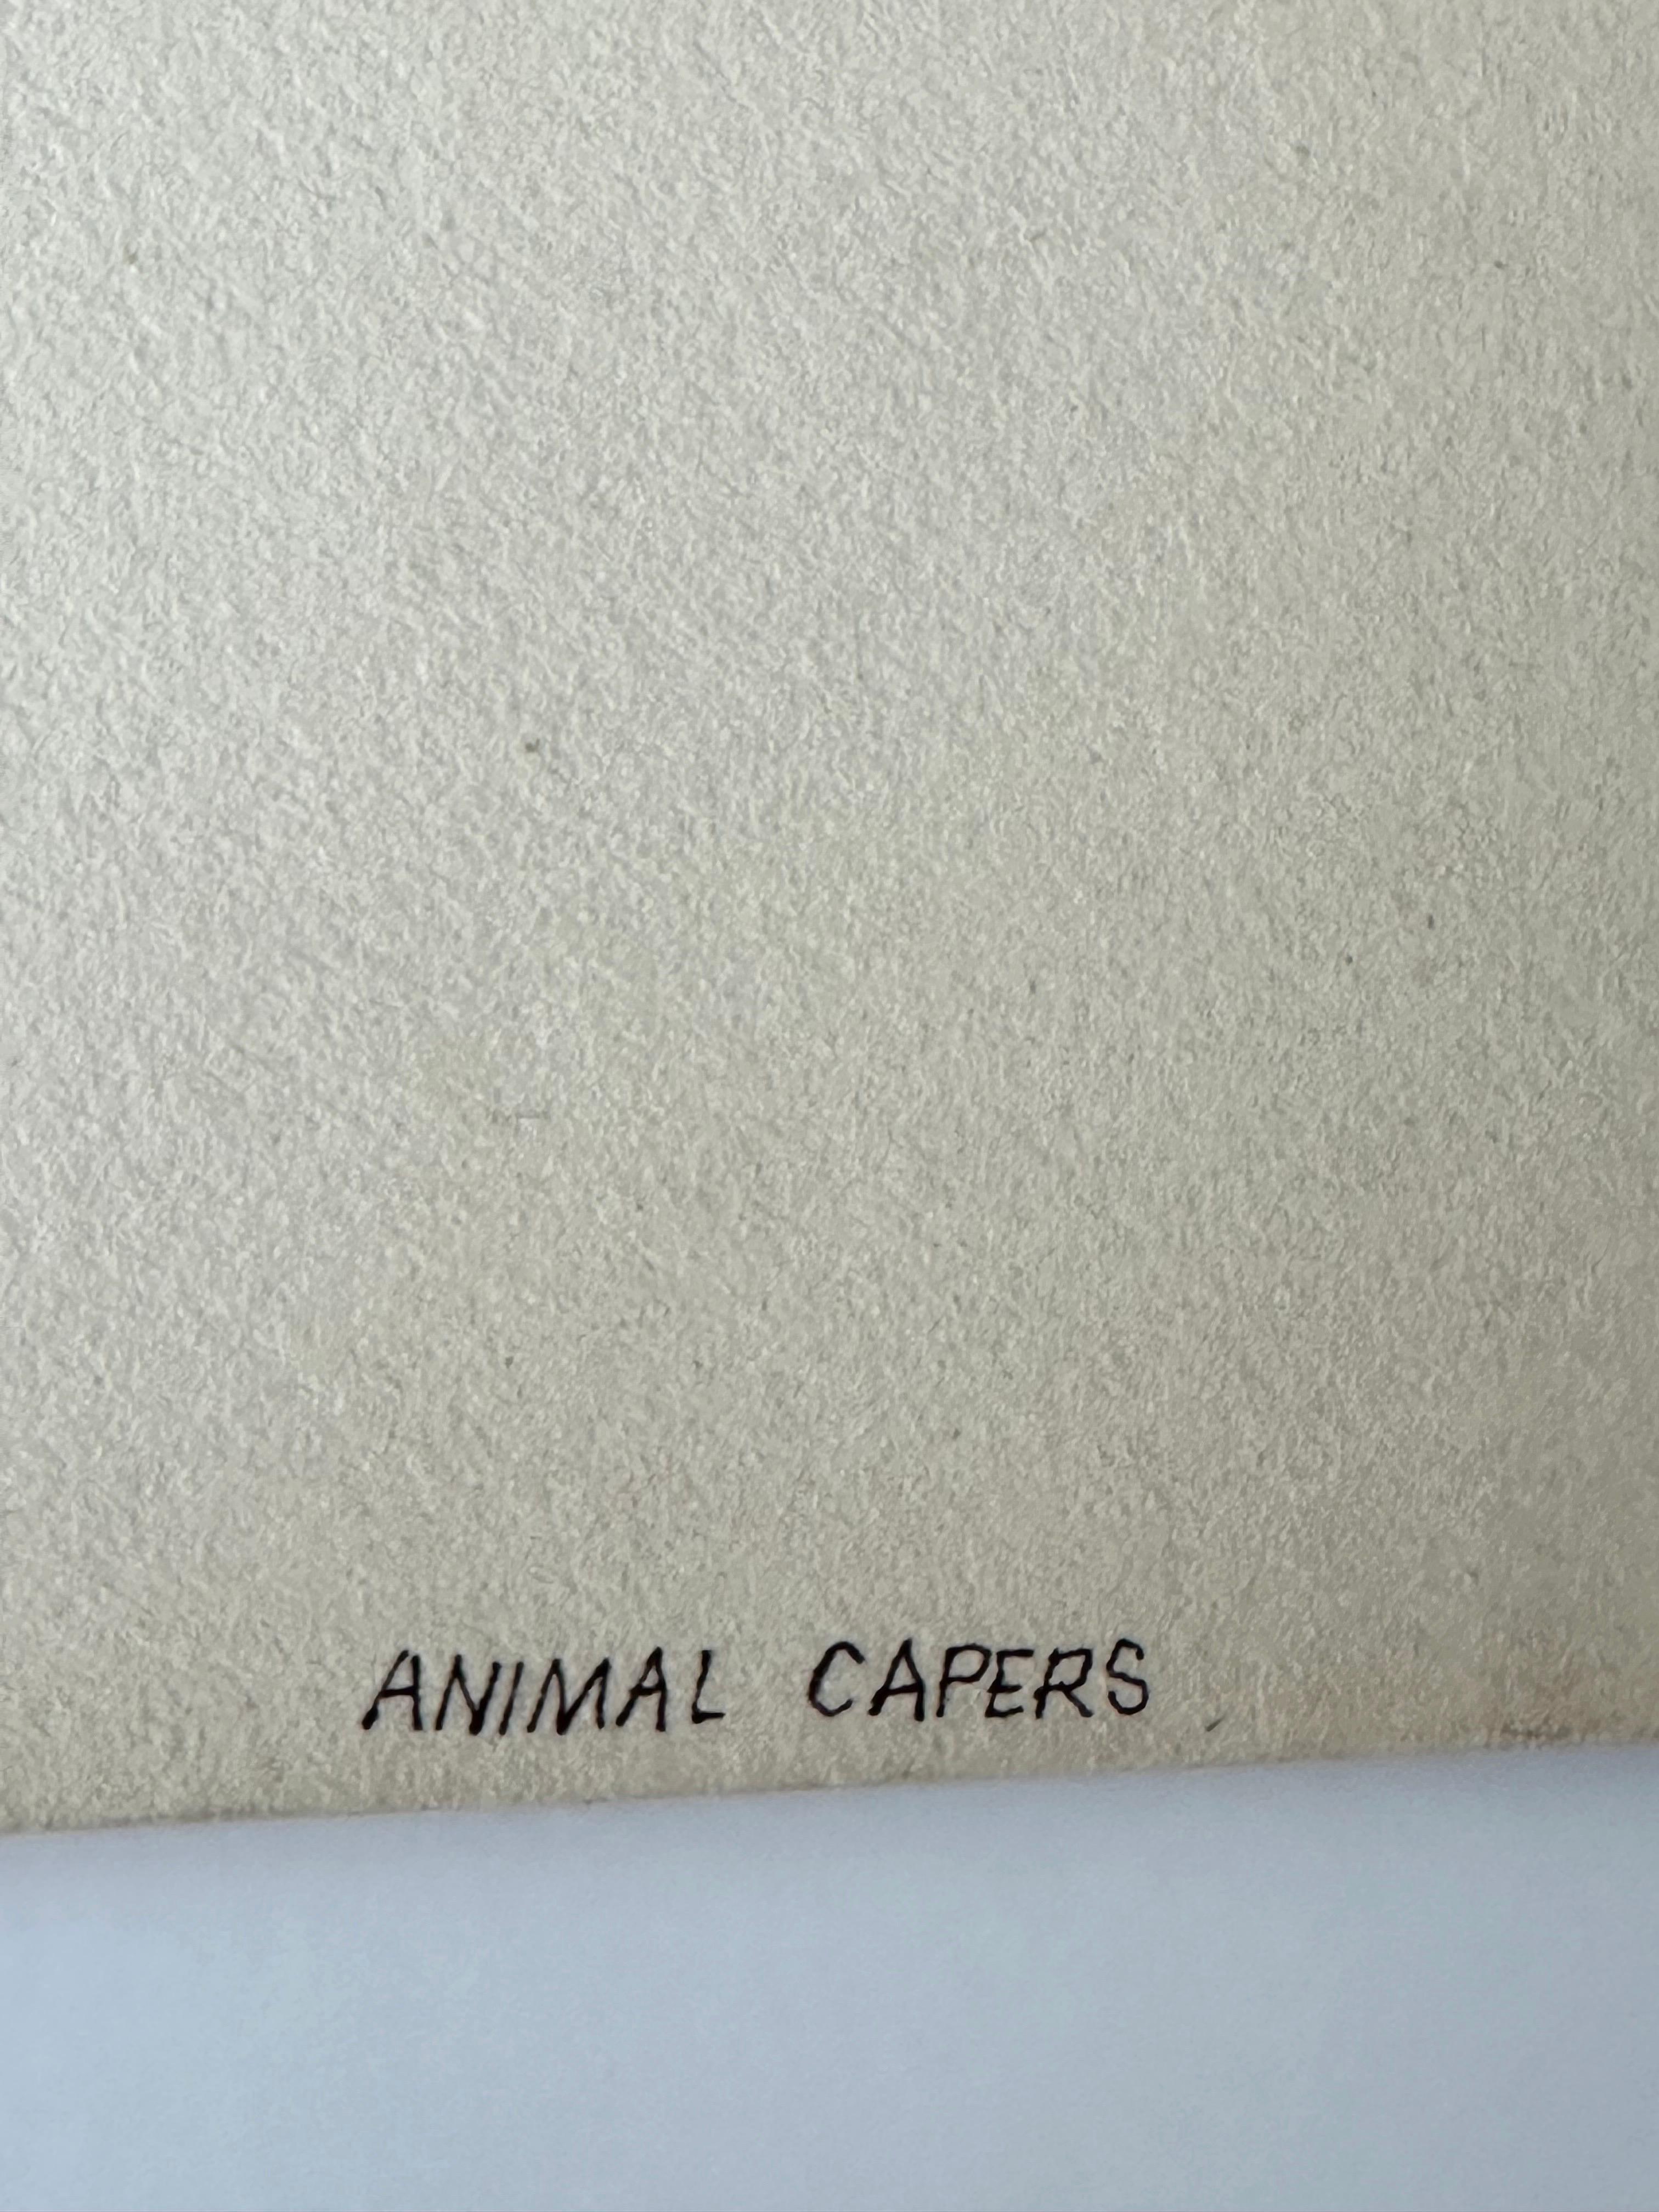 Animal Capers (Black Surrealist Artist) For Sale 6